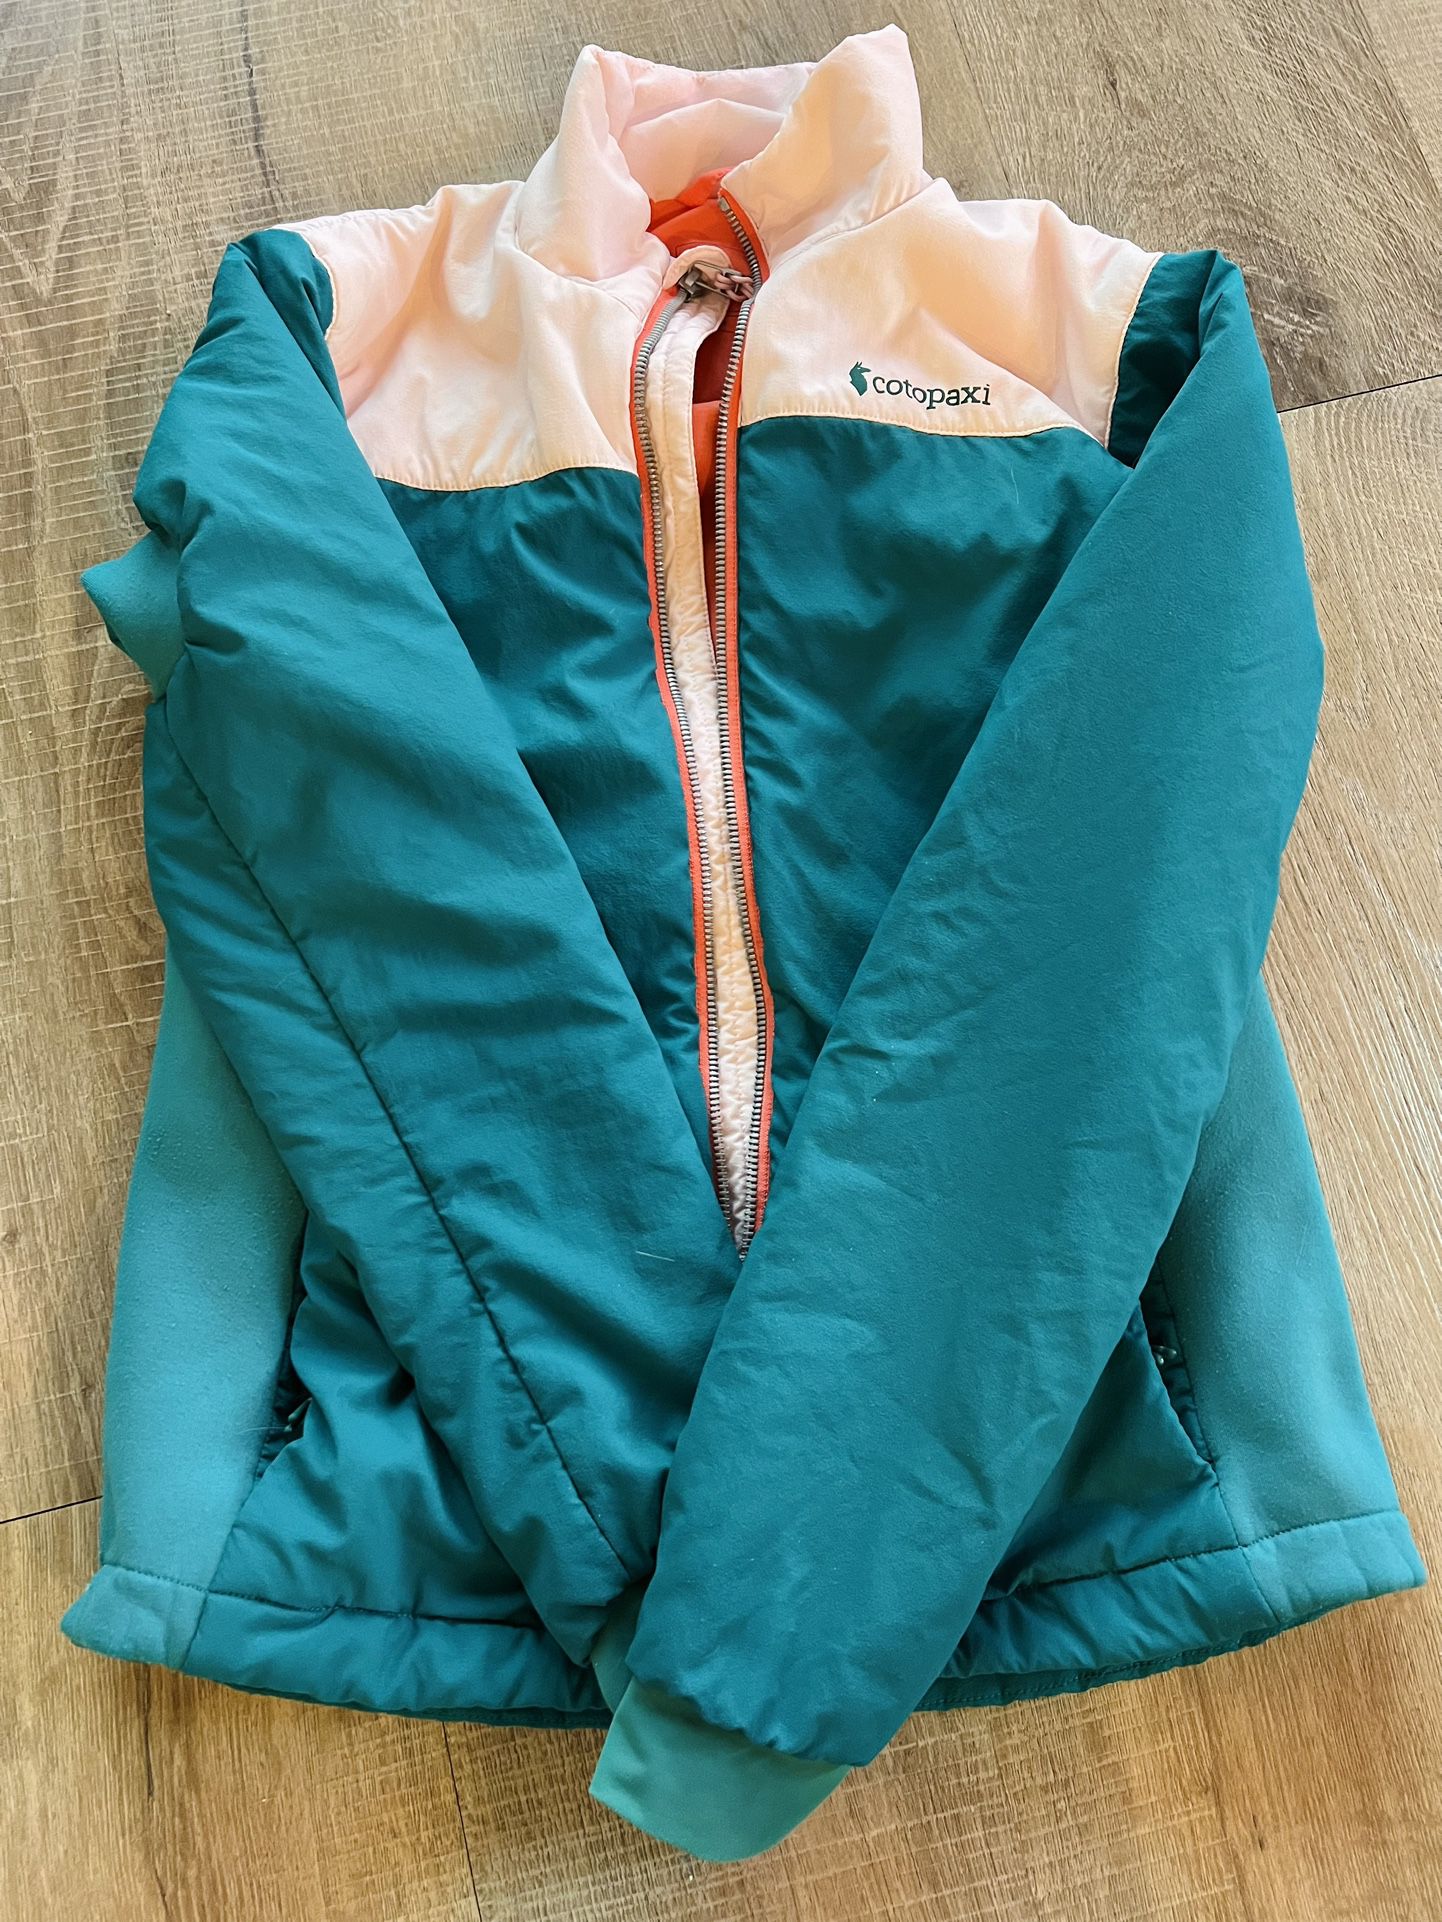 Womens Green / Pink Cotopaxi Jacket